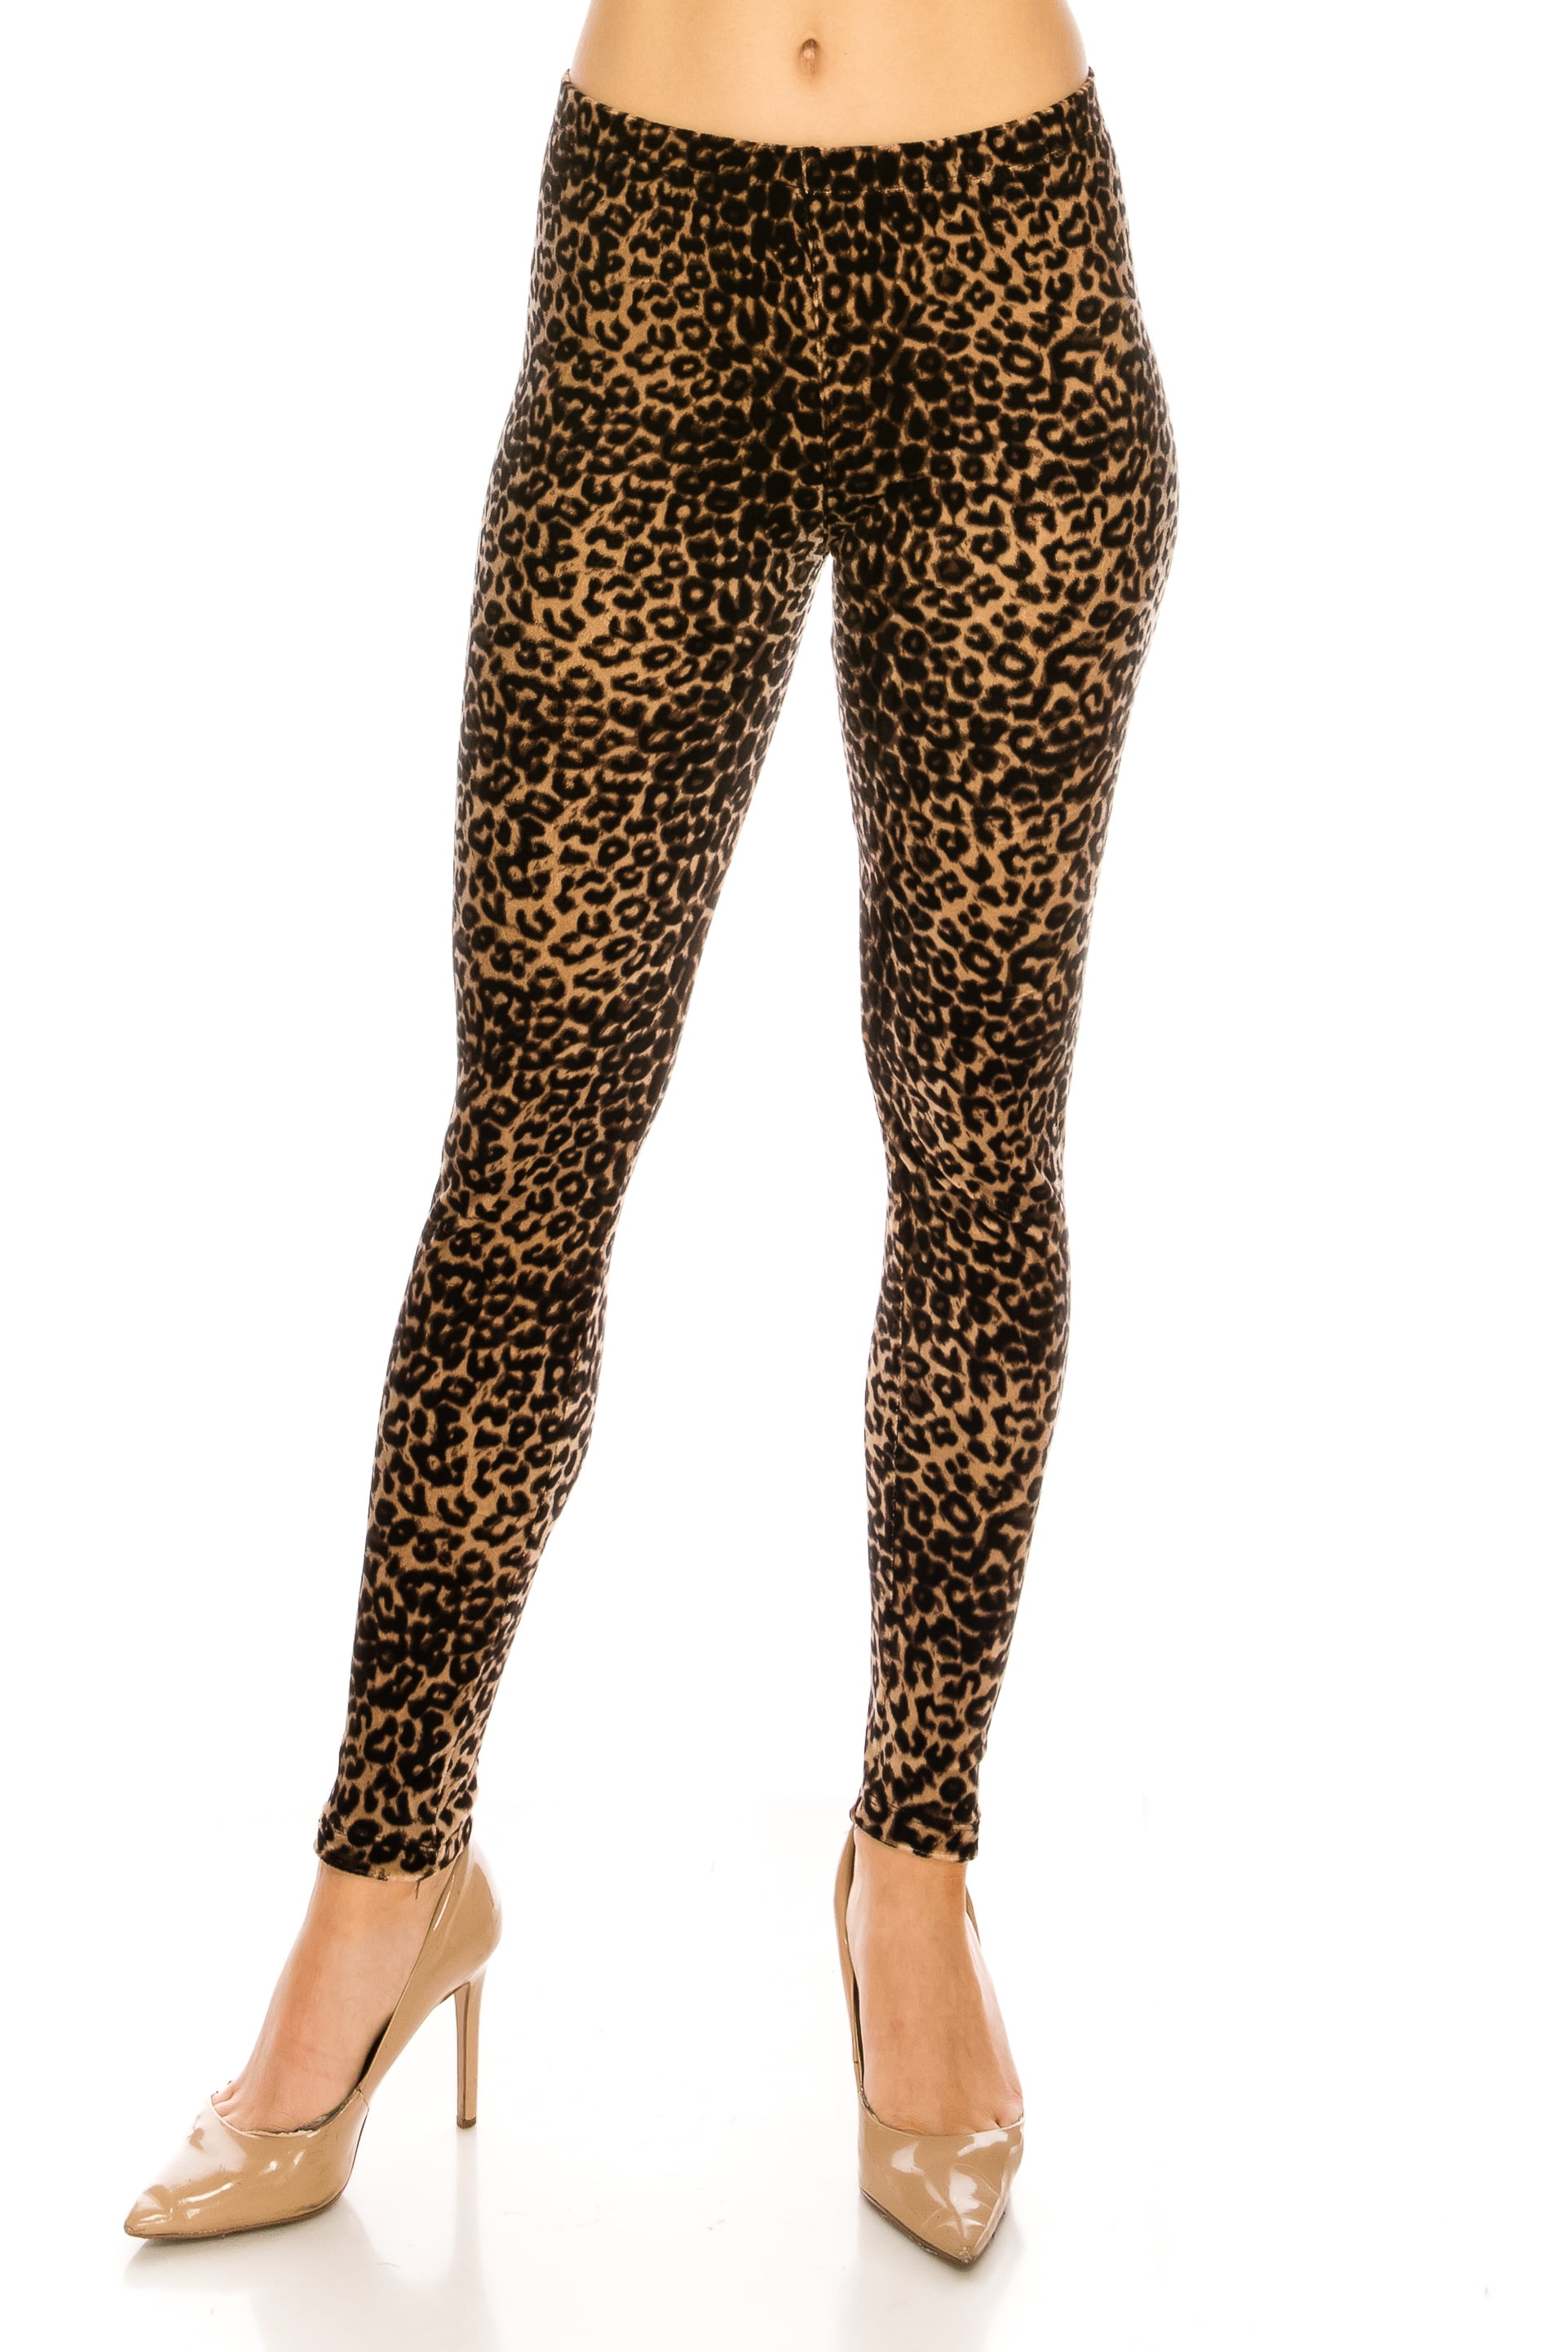 ALWAYS Women's Animal Velvet Leggings - Premium Soft Stretch Warm Winter  Leopard Print Pattern Pants 377 One Size